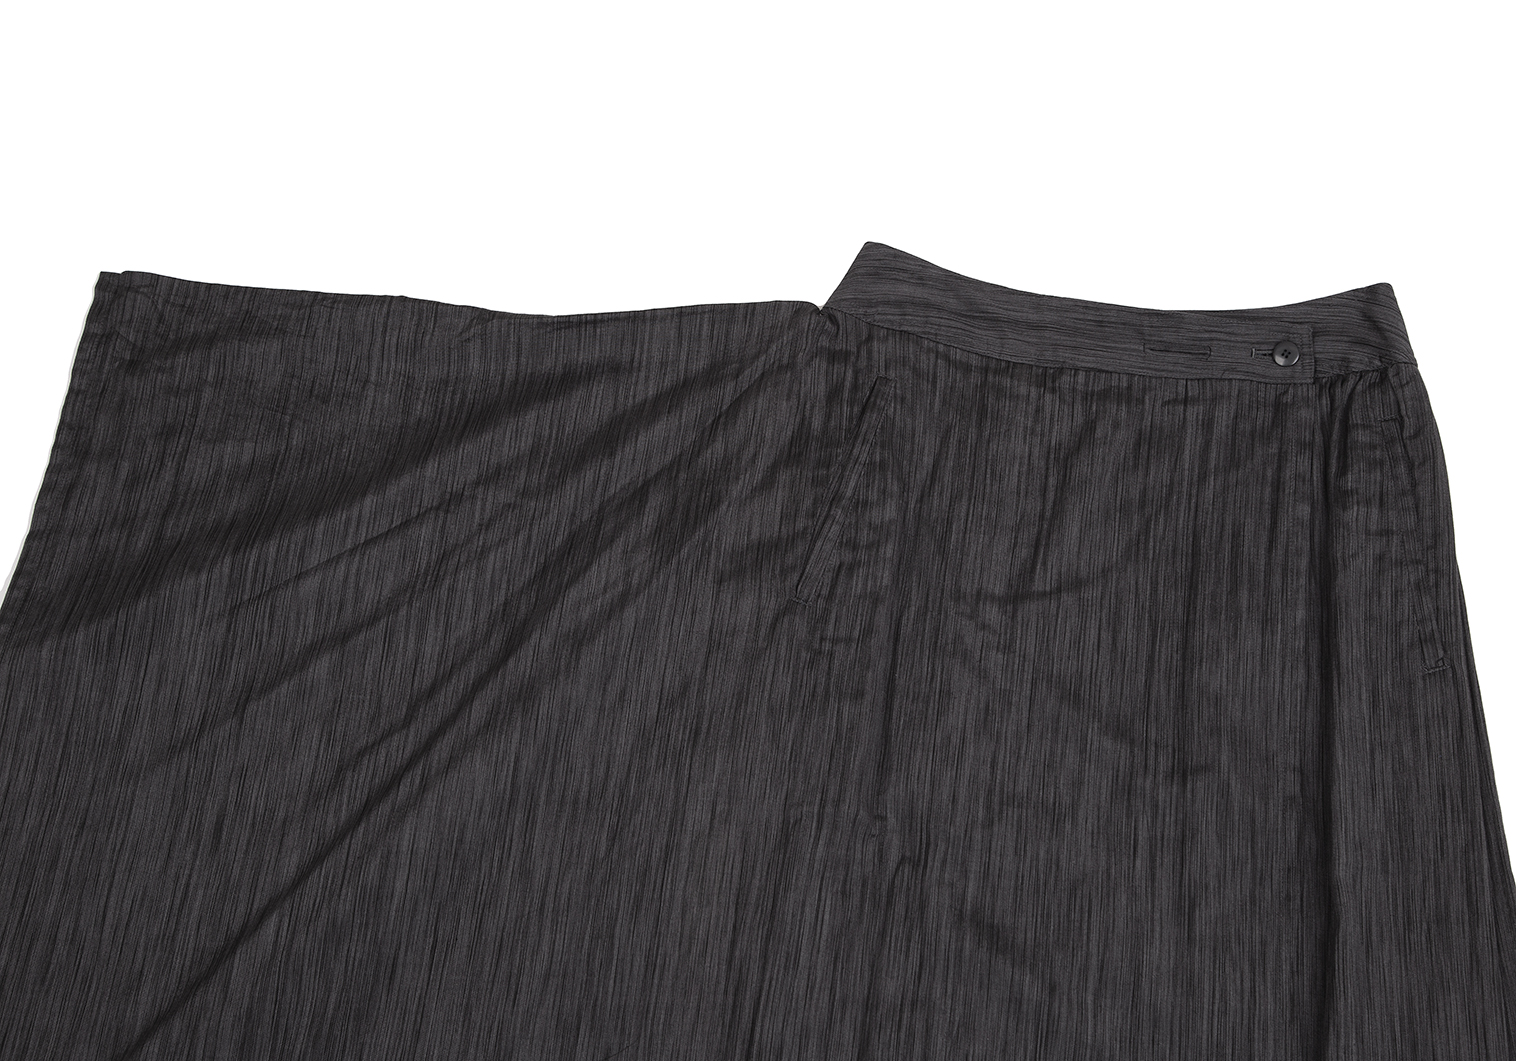 00sISSEY MIYAKE/装飾デザイン ロングスカート/2/パープル×ブラック